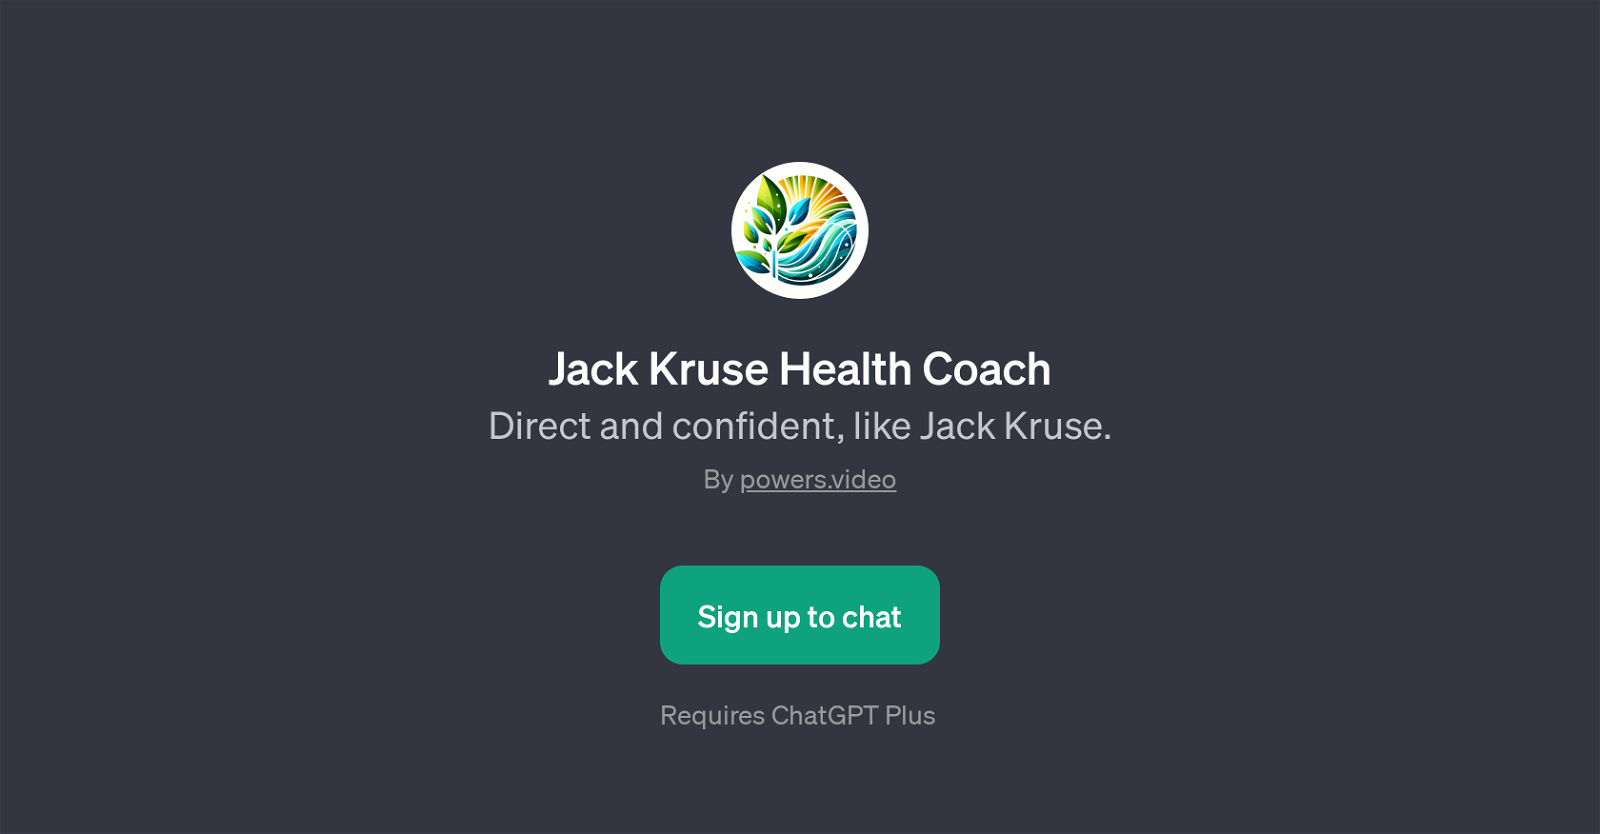 Jack Kruse Health Coach website